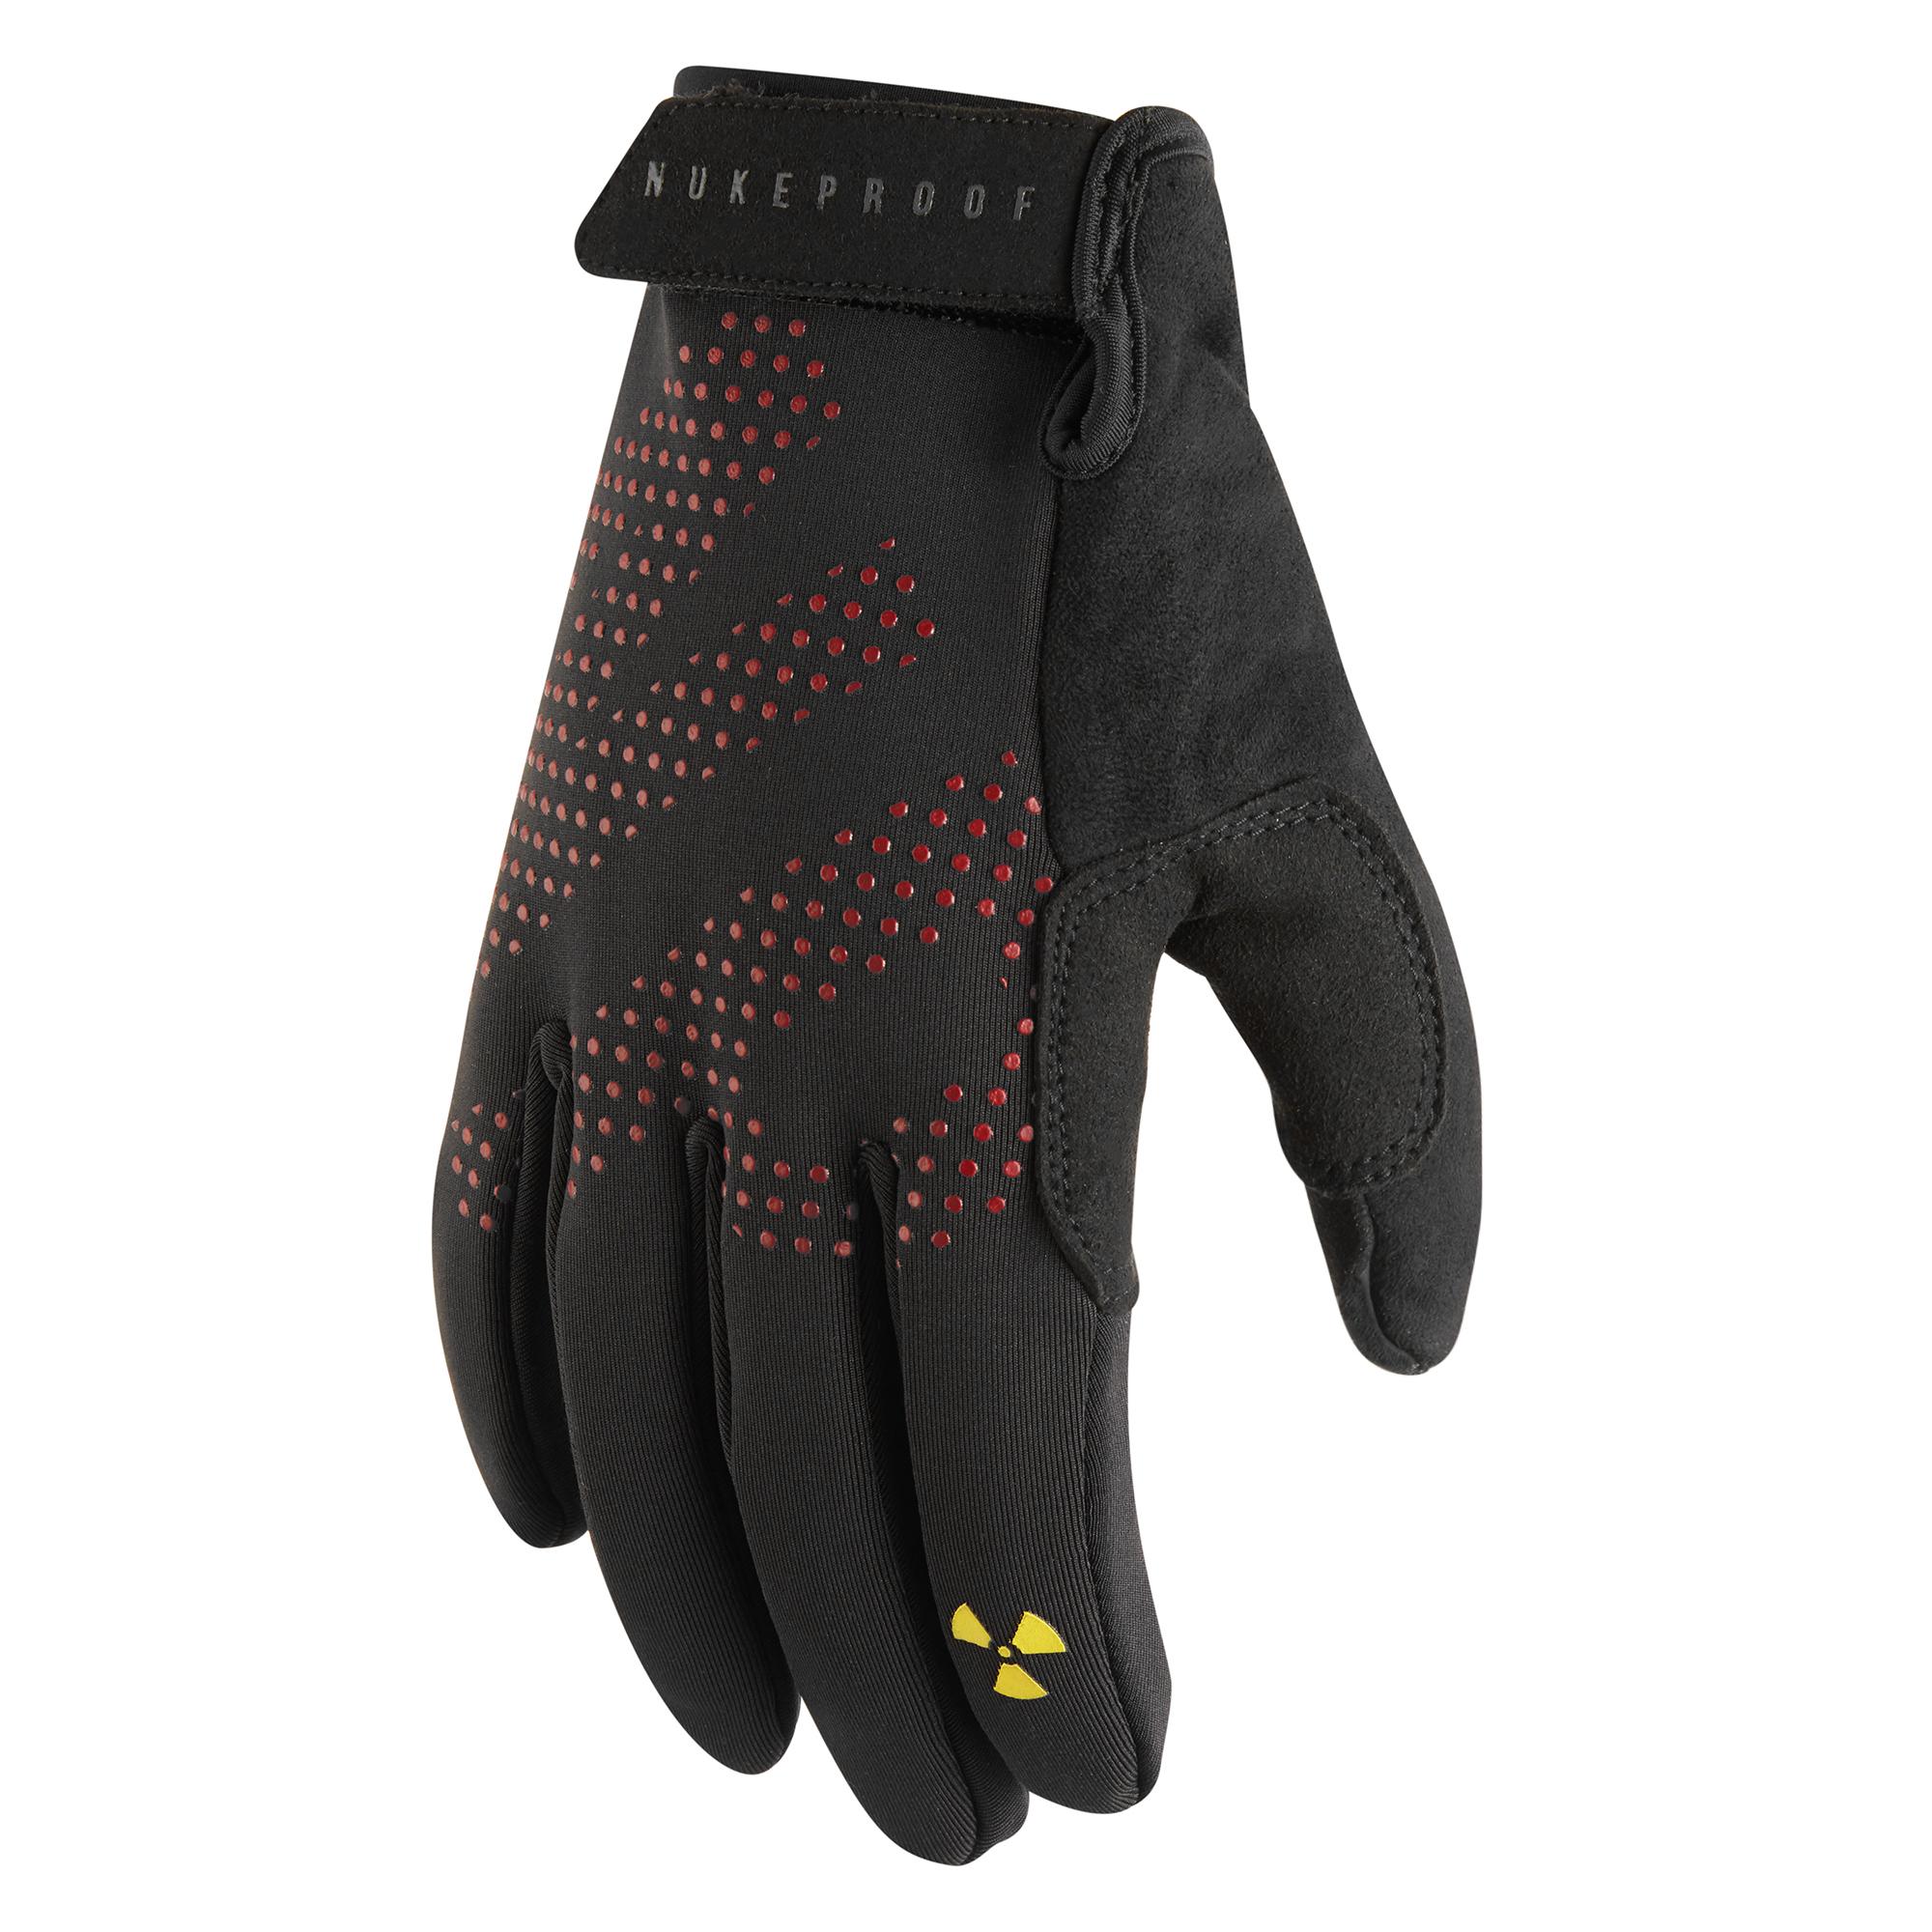 Nukeproof Blackline Winter Glove - Black/red